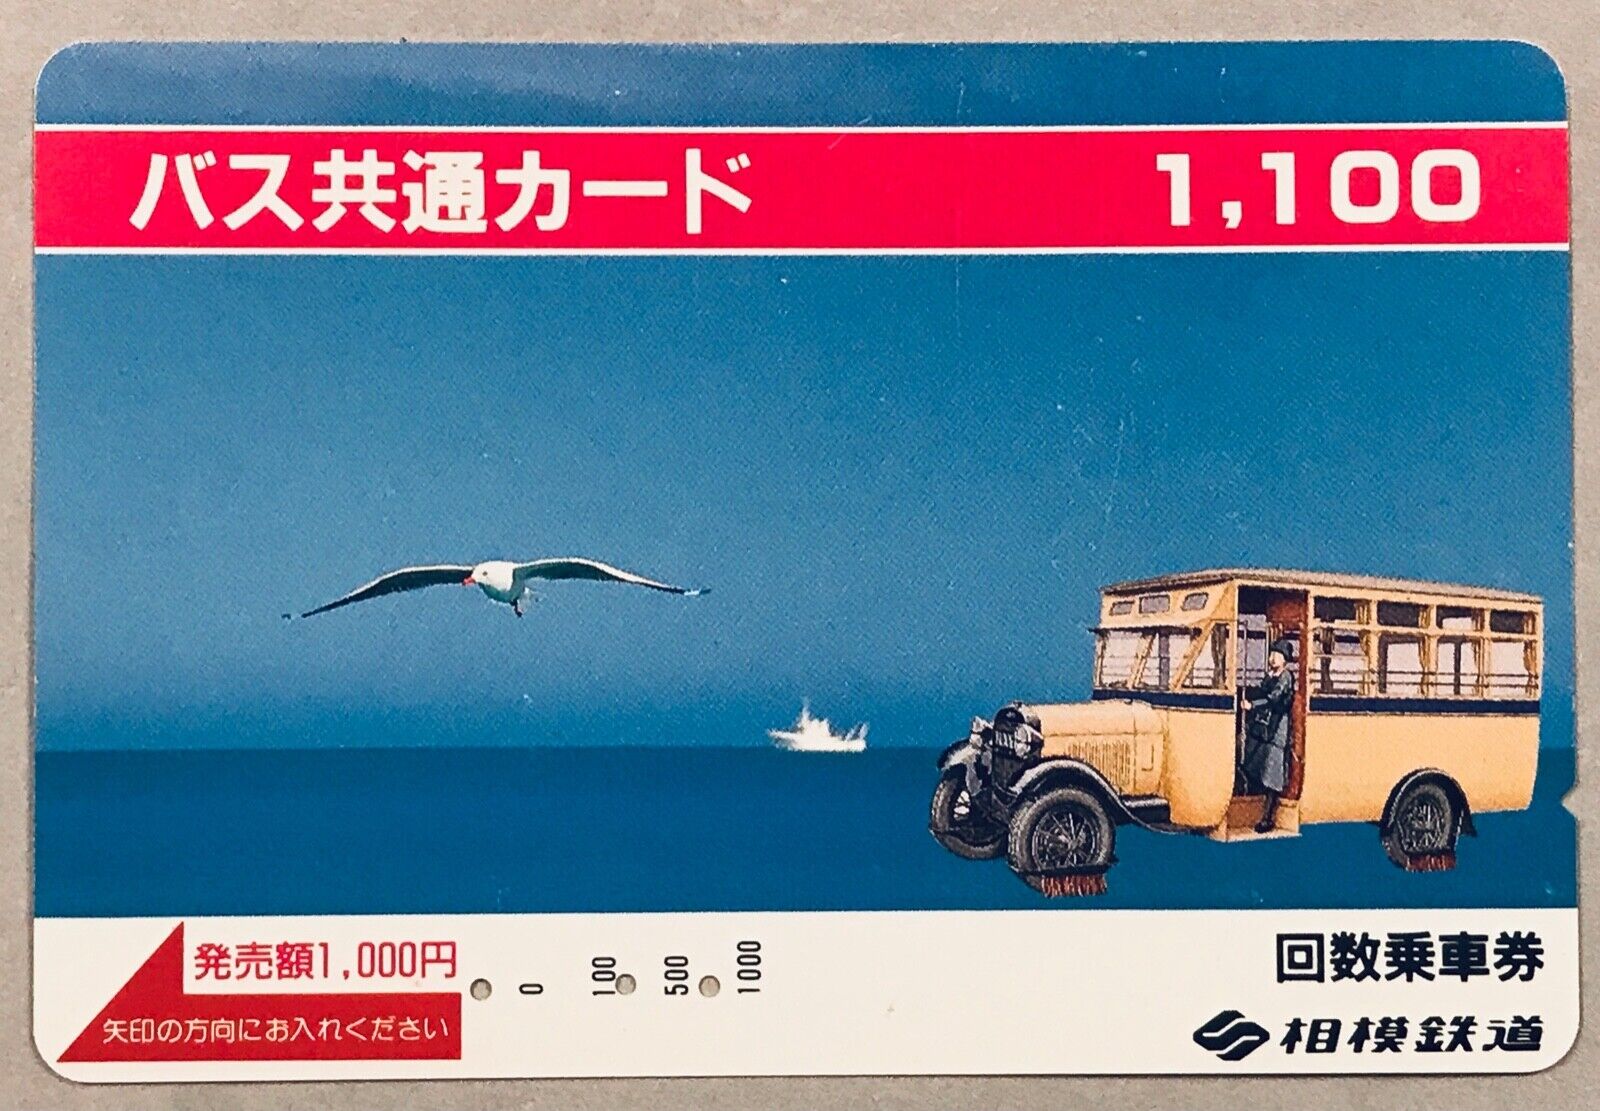 Phone card - Japan - Travel by bus [11]